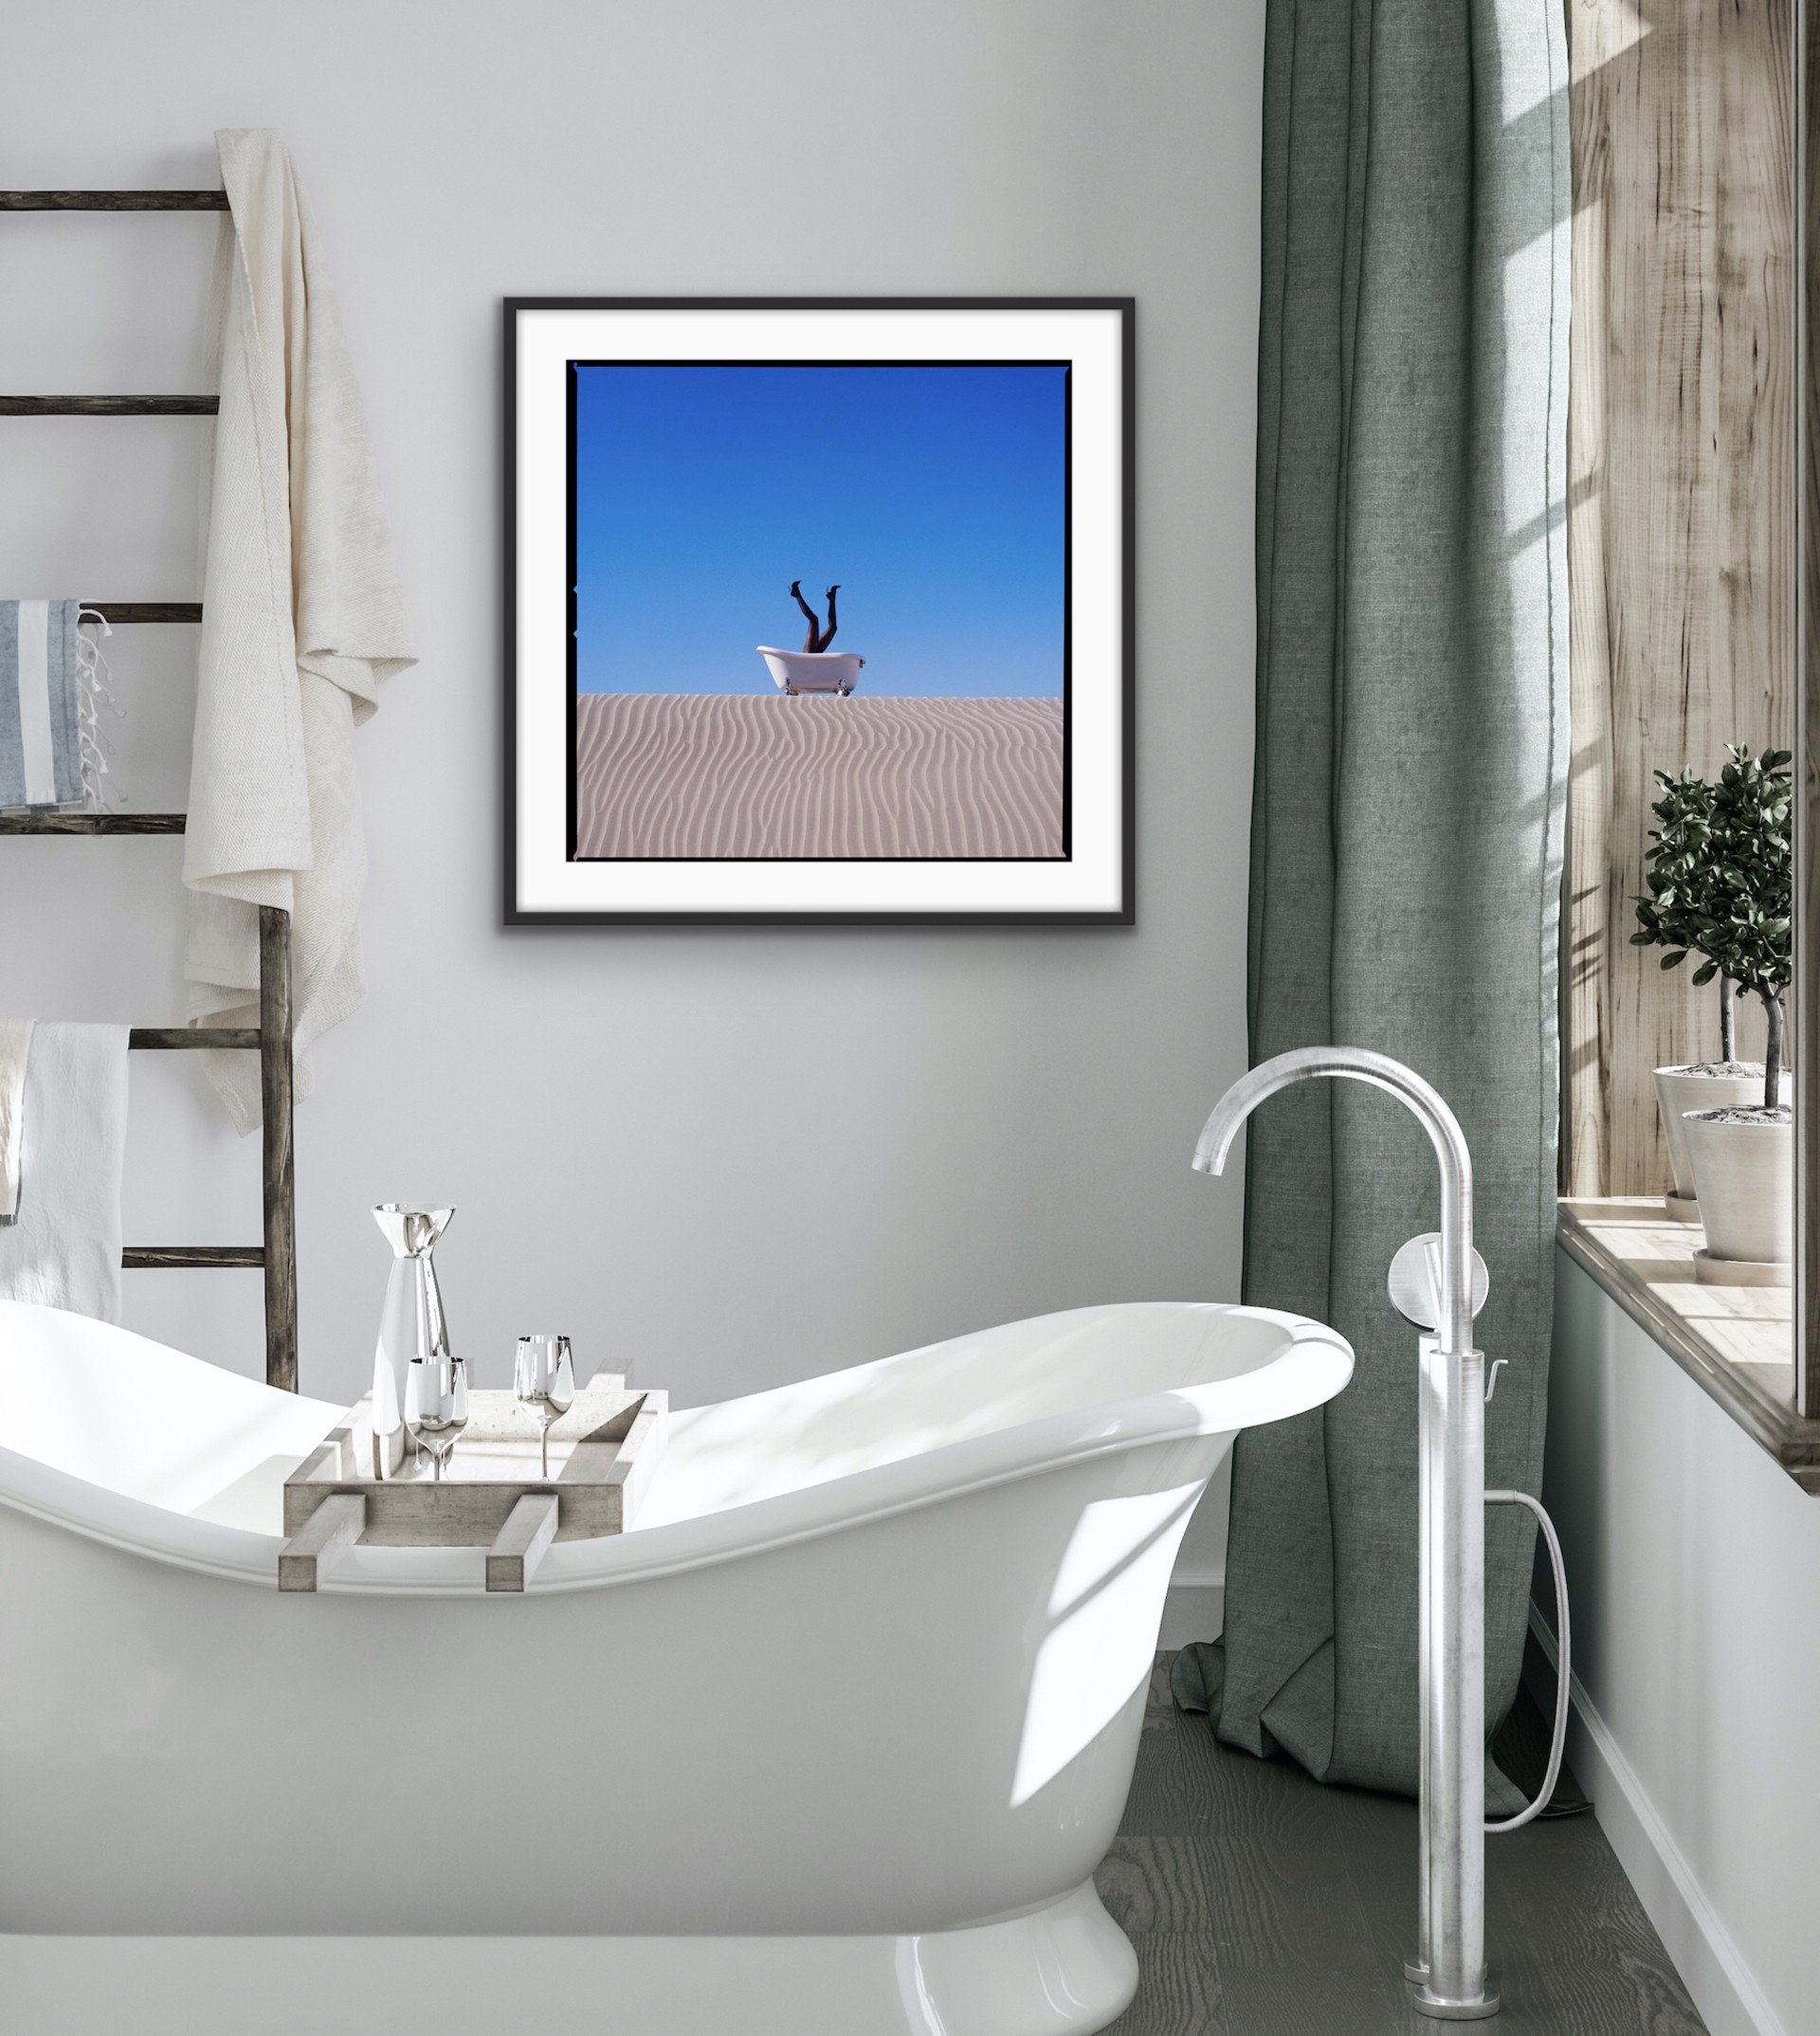 Bathtub in the Sand by Tyler Shields